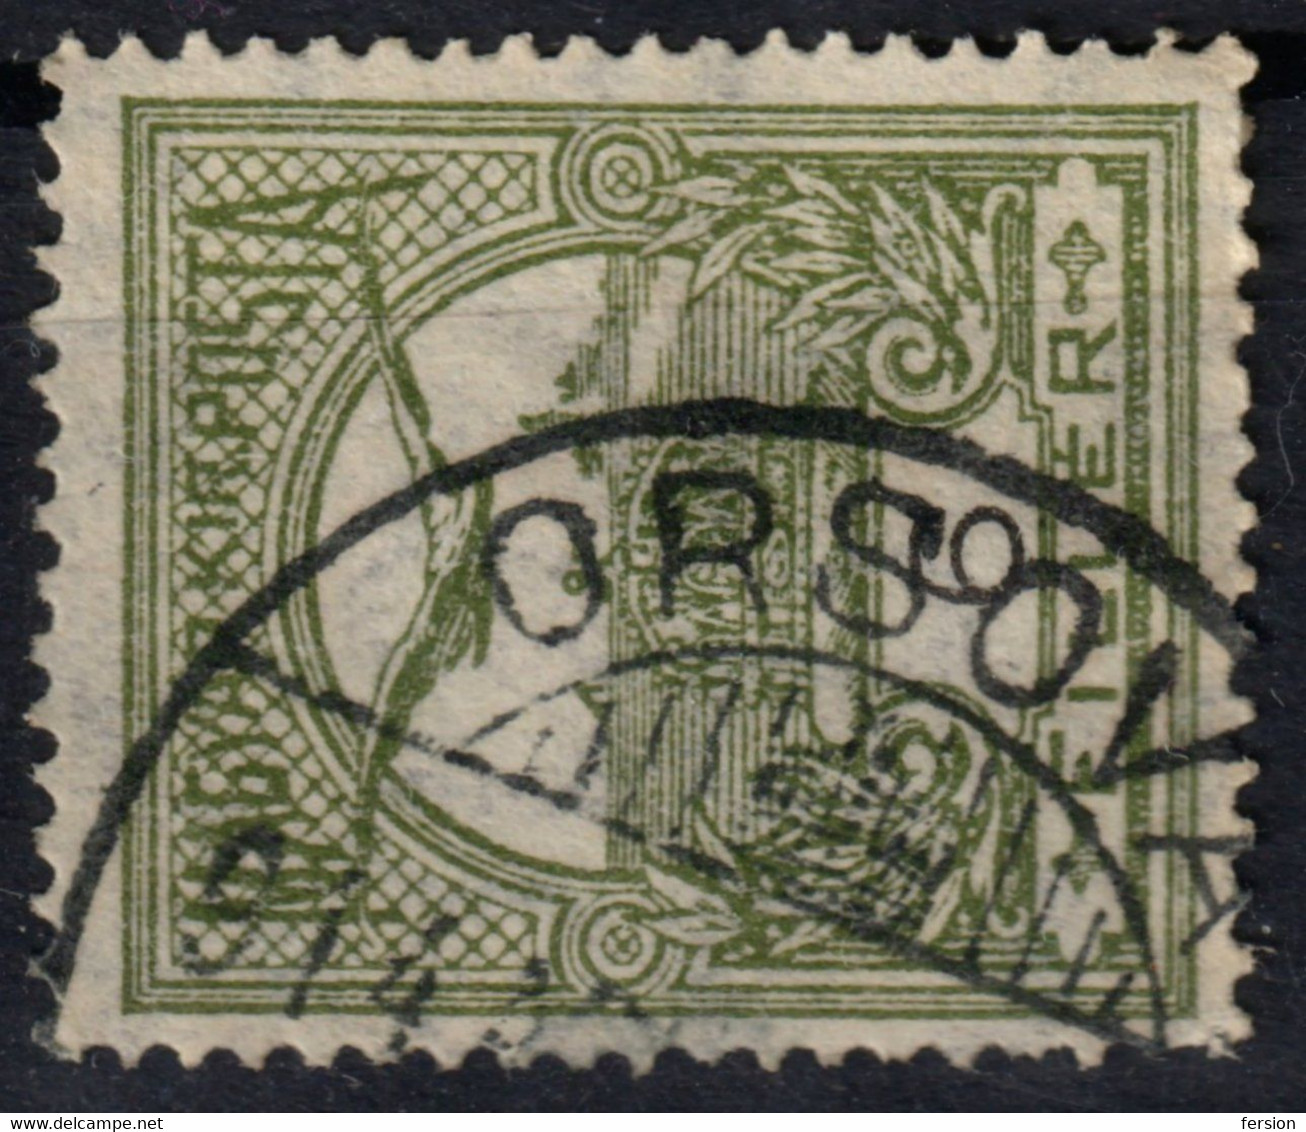 ORSOVA Orșova Postmark / TURUL Crown 1914 Hungary Romania Transylvania  Krassó Szörény County KuK - 6 Fill - Transylvania